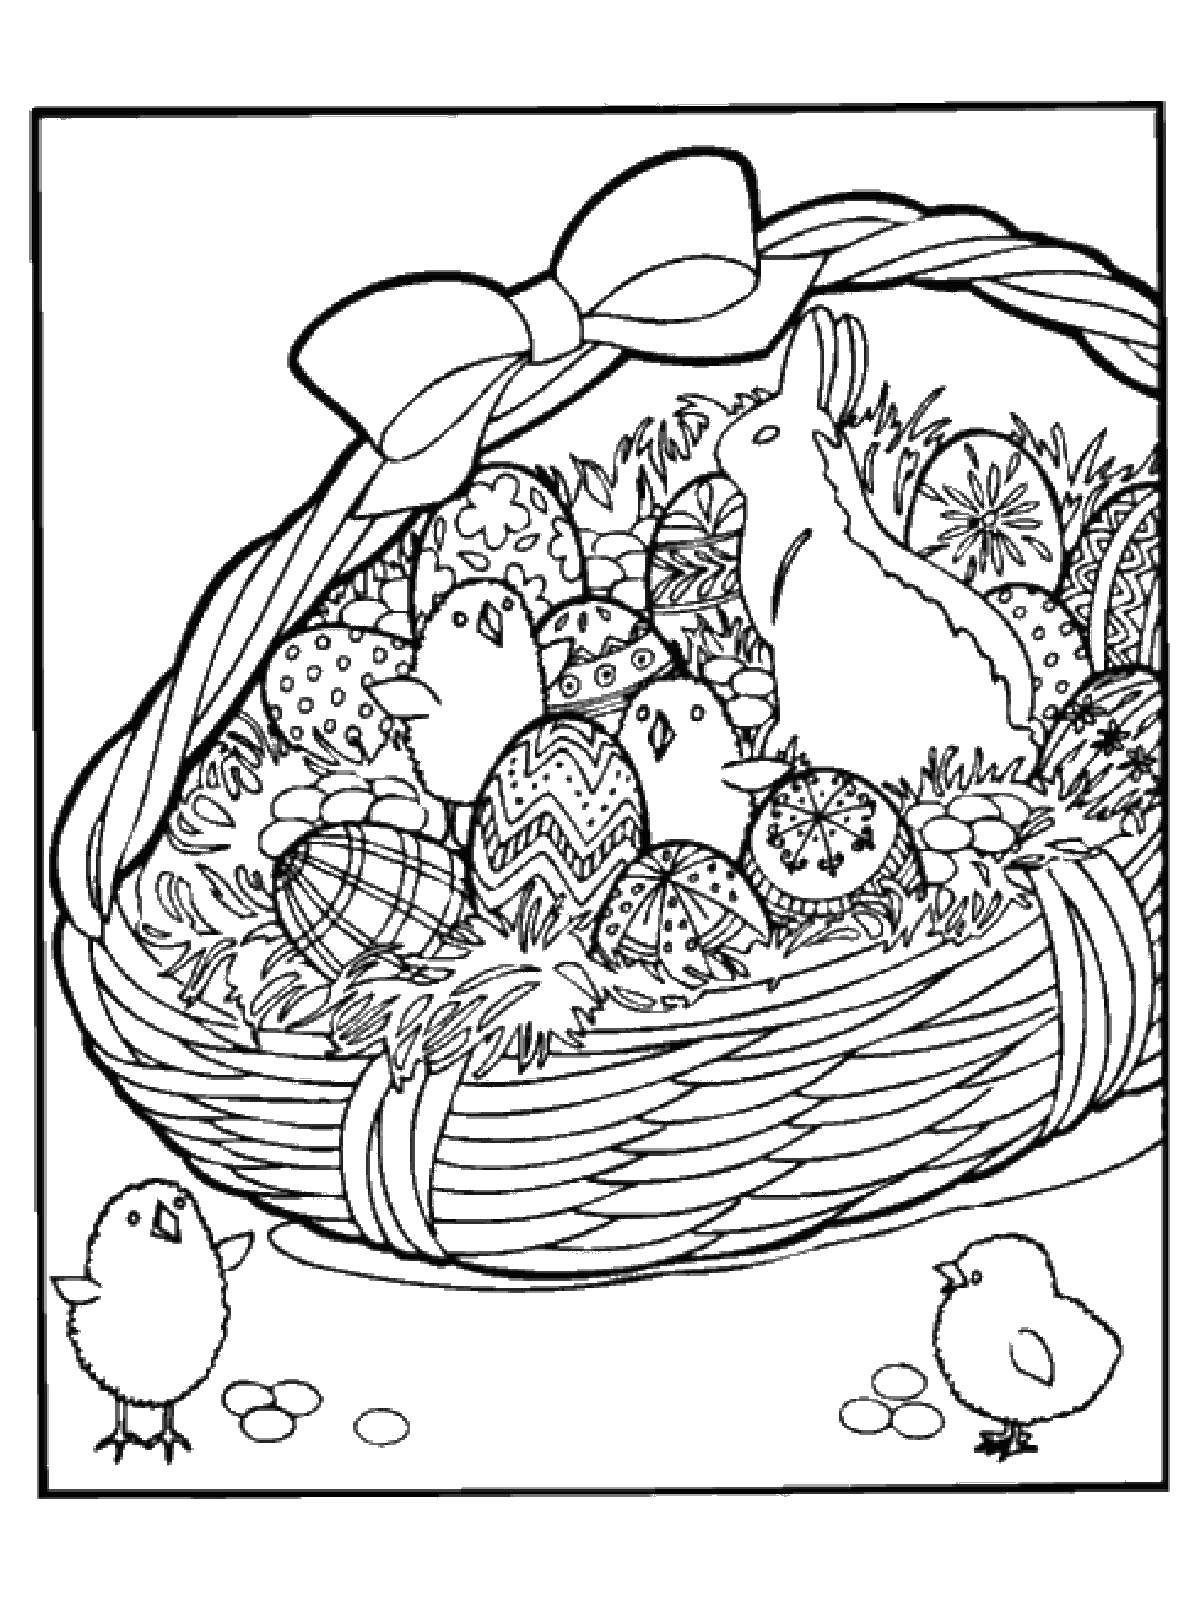 Название: Раскраска Корзинка с птенцами и яйцами. Категория: раскраски пасха. Теги: Пасха, яйца, цыплята.